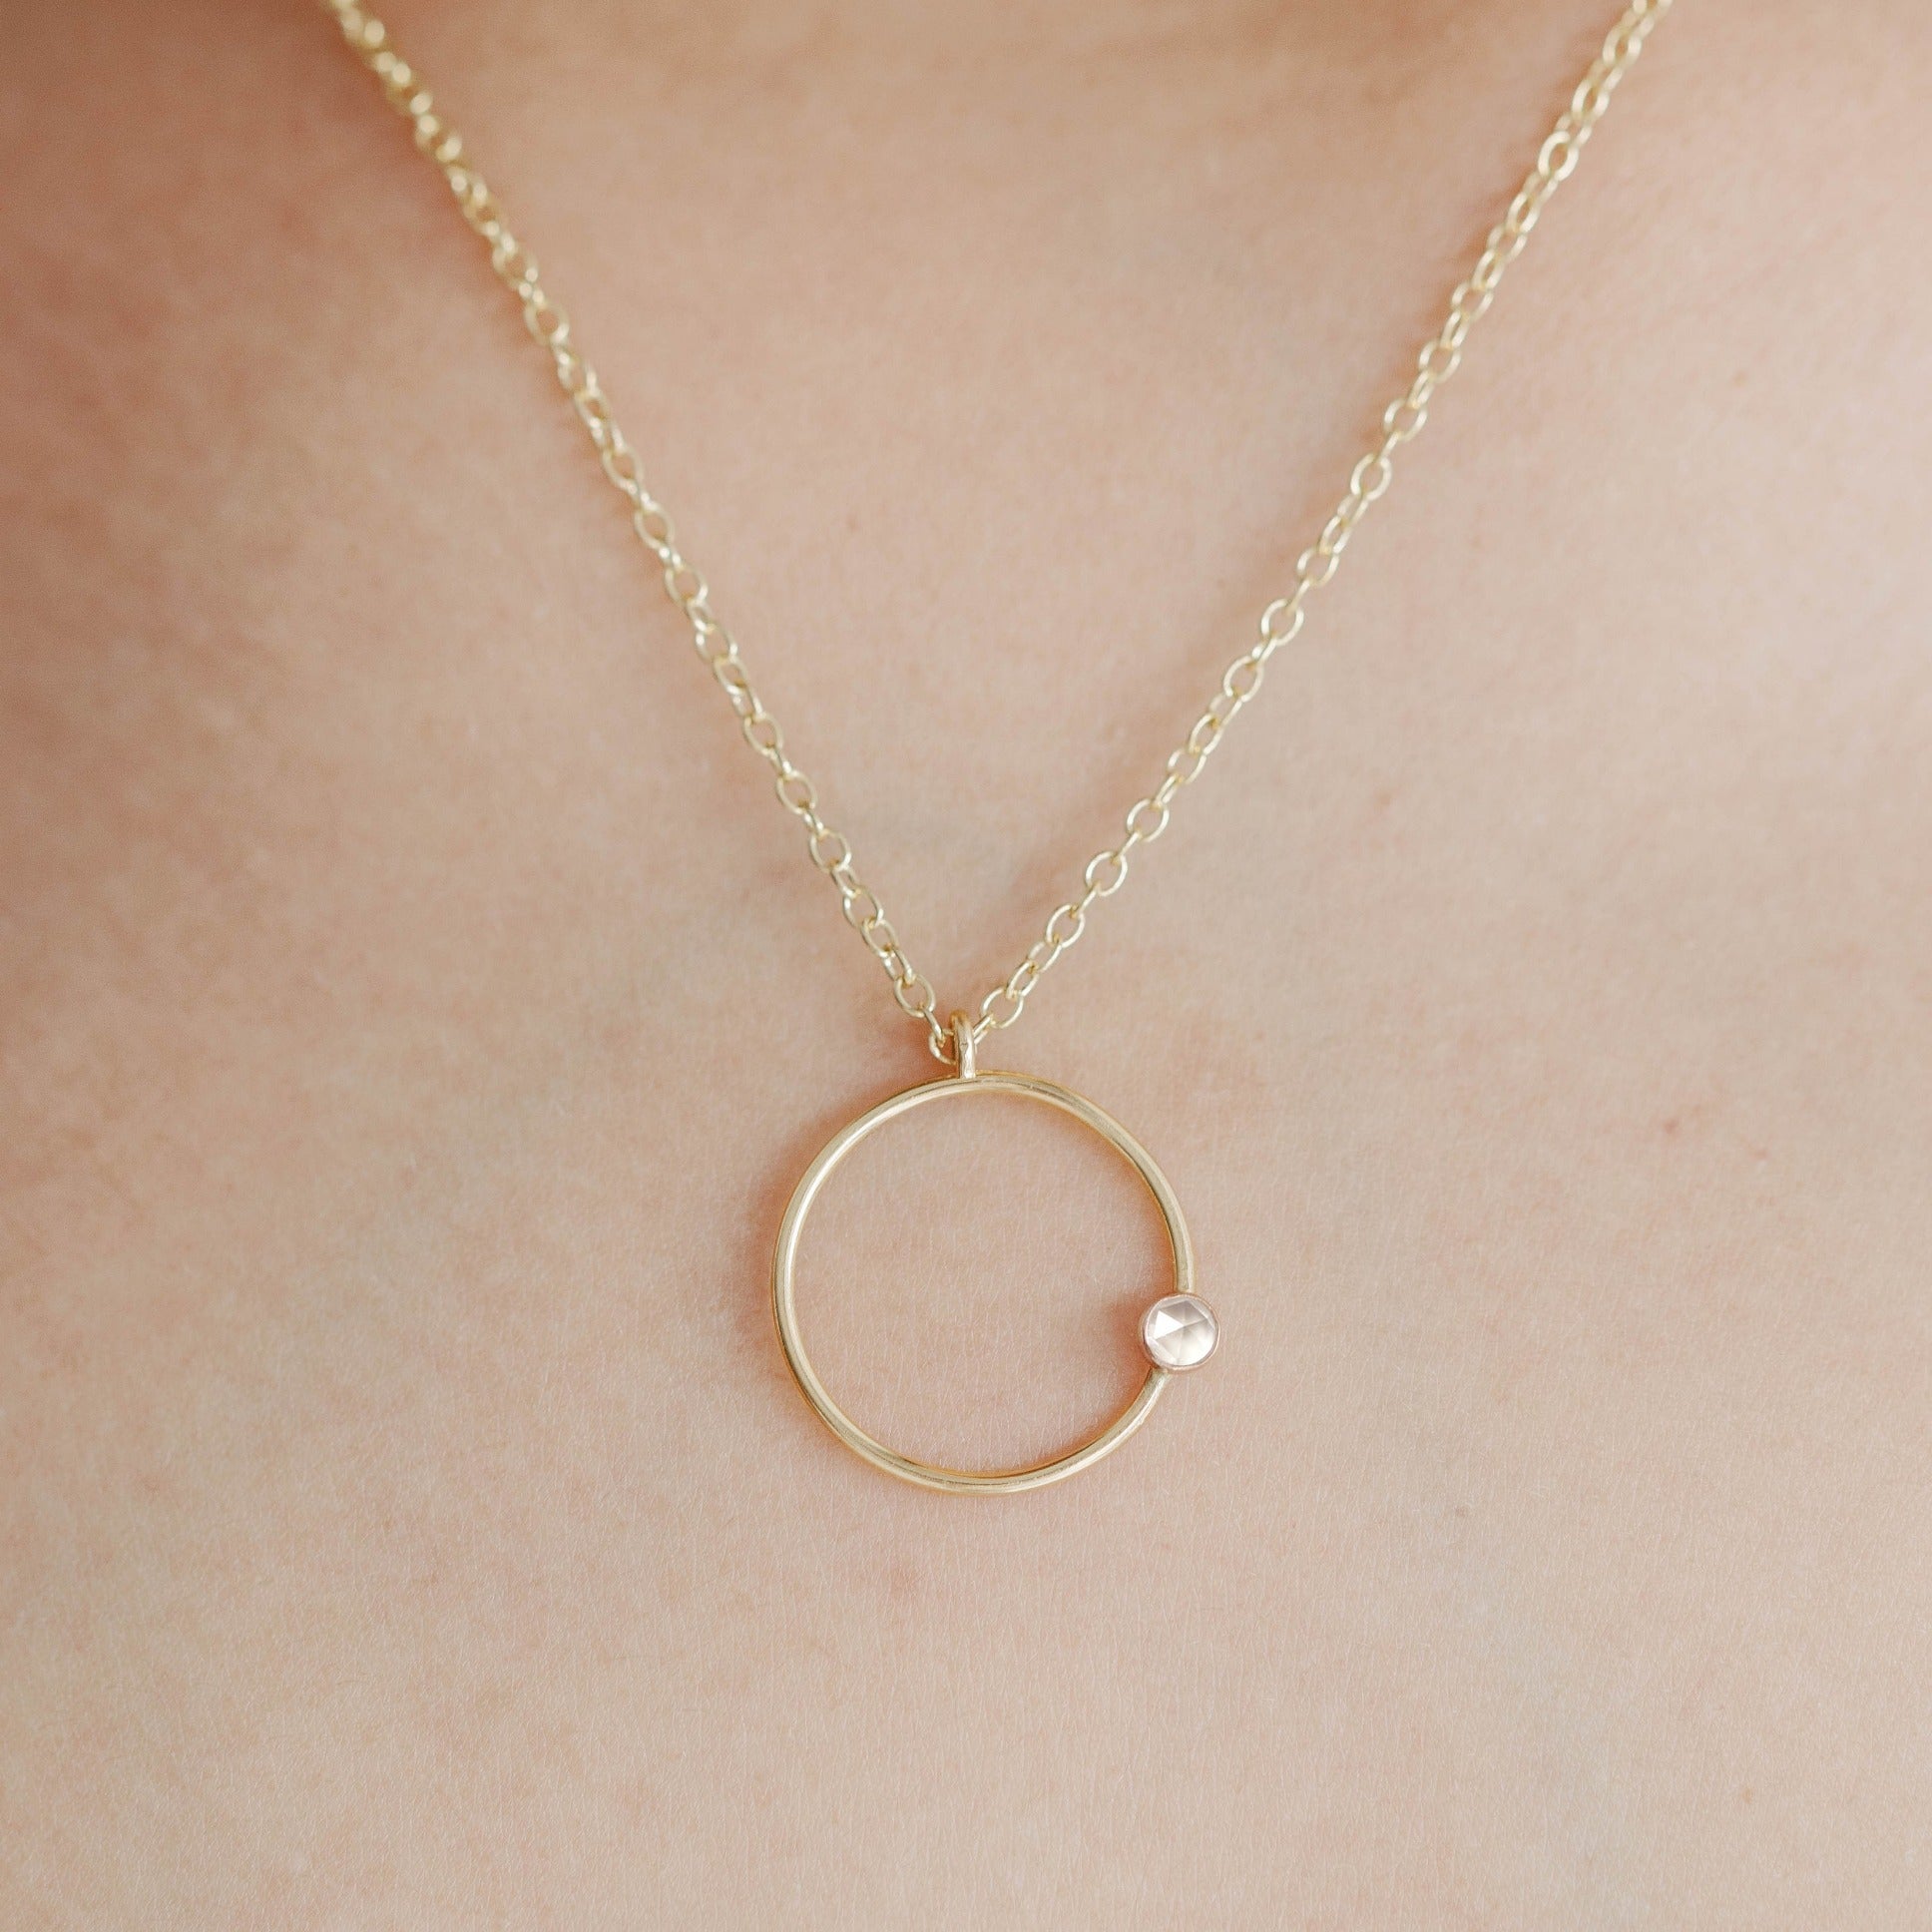 Gold, dainty, modern and minimal circle pendant